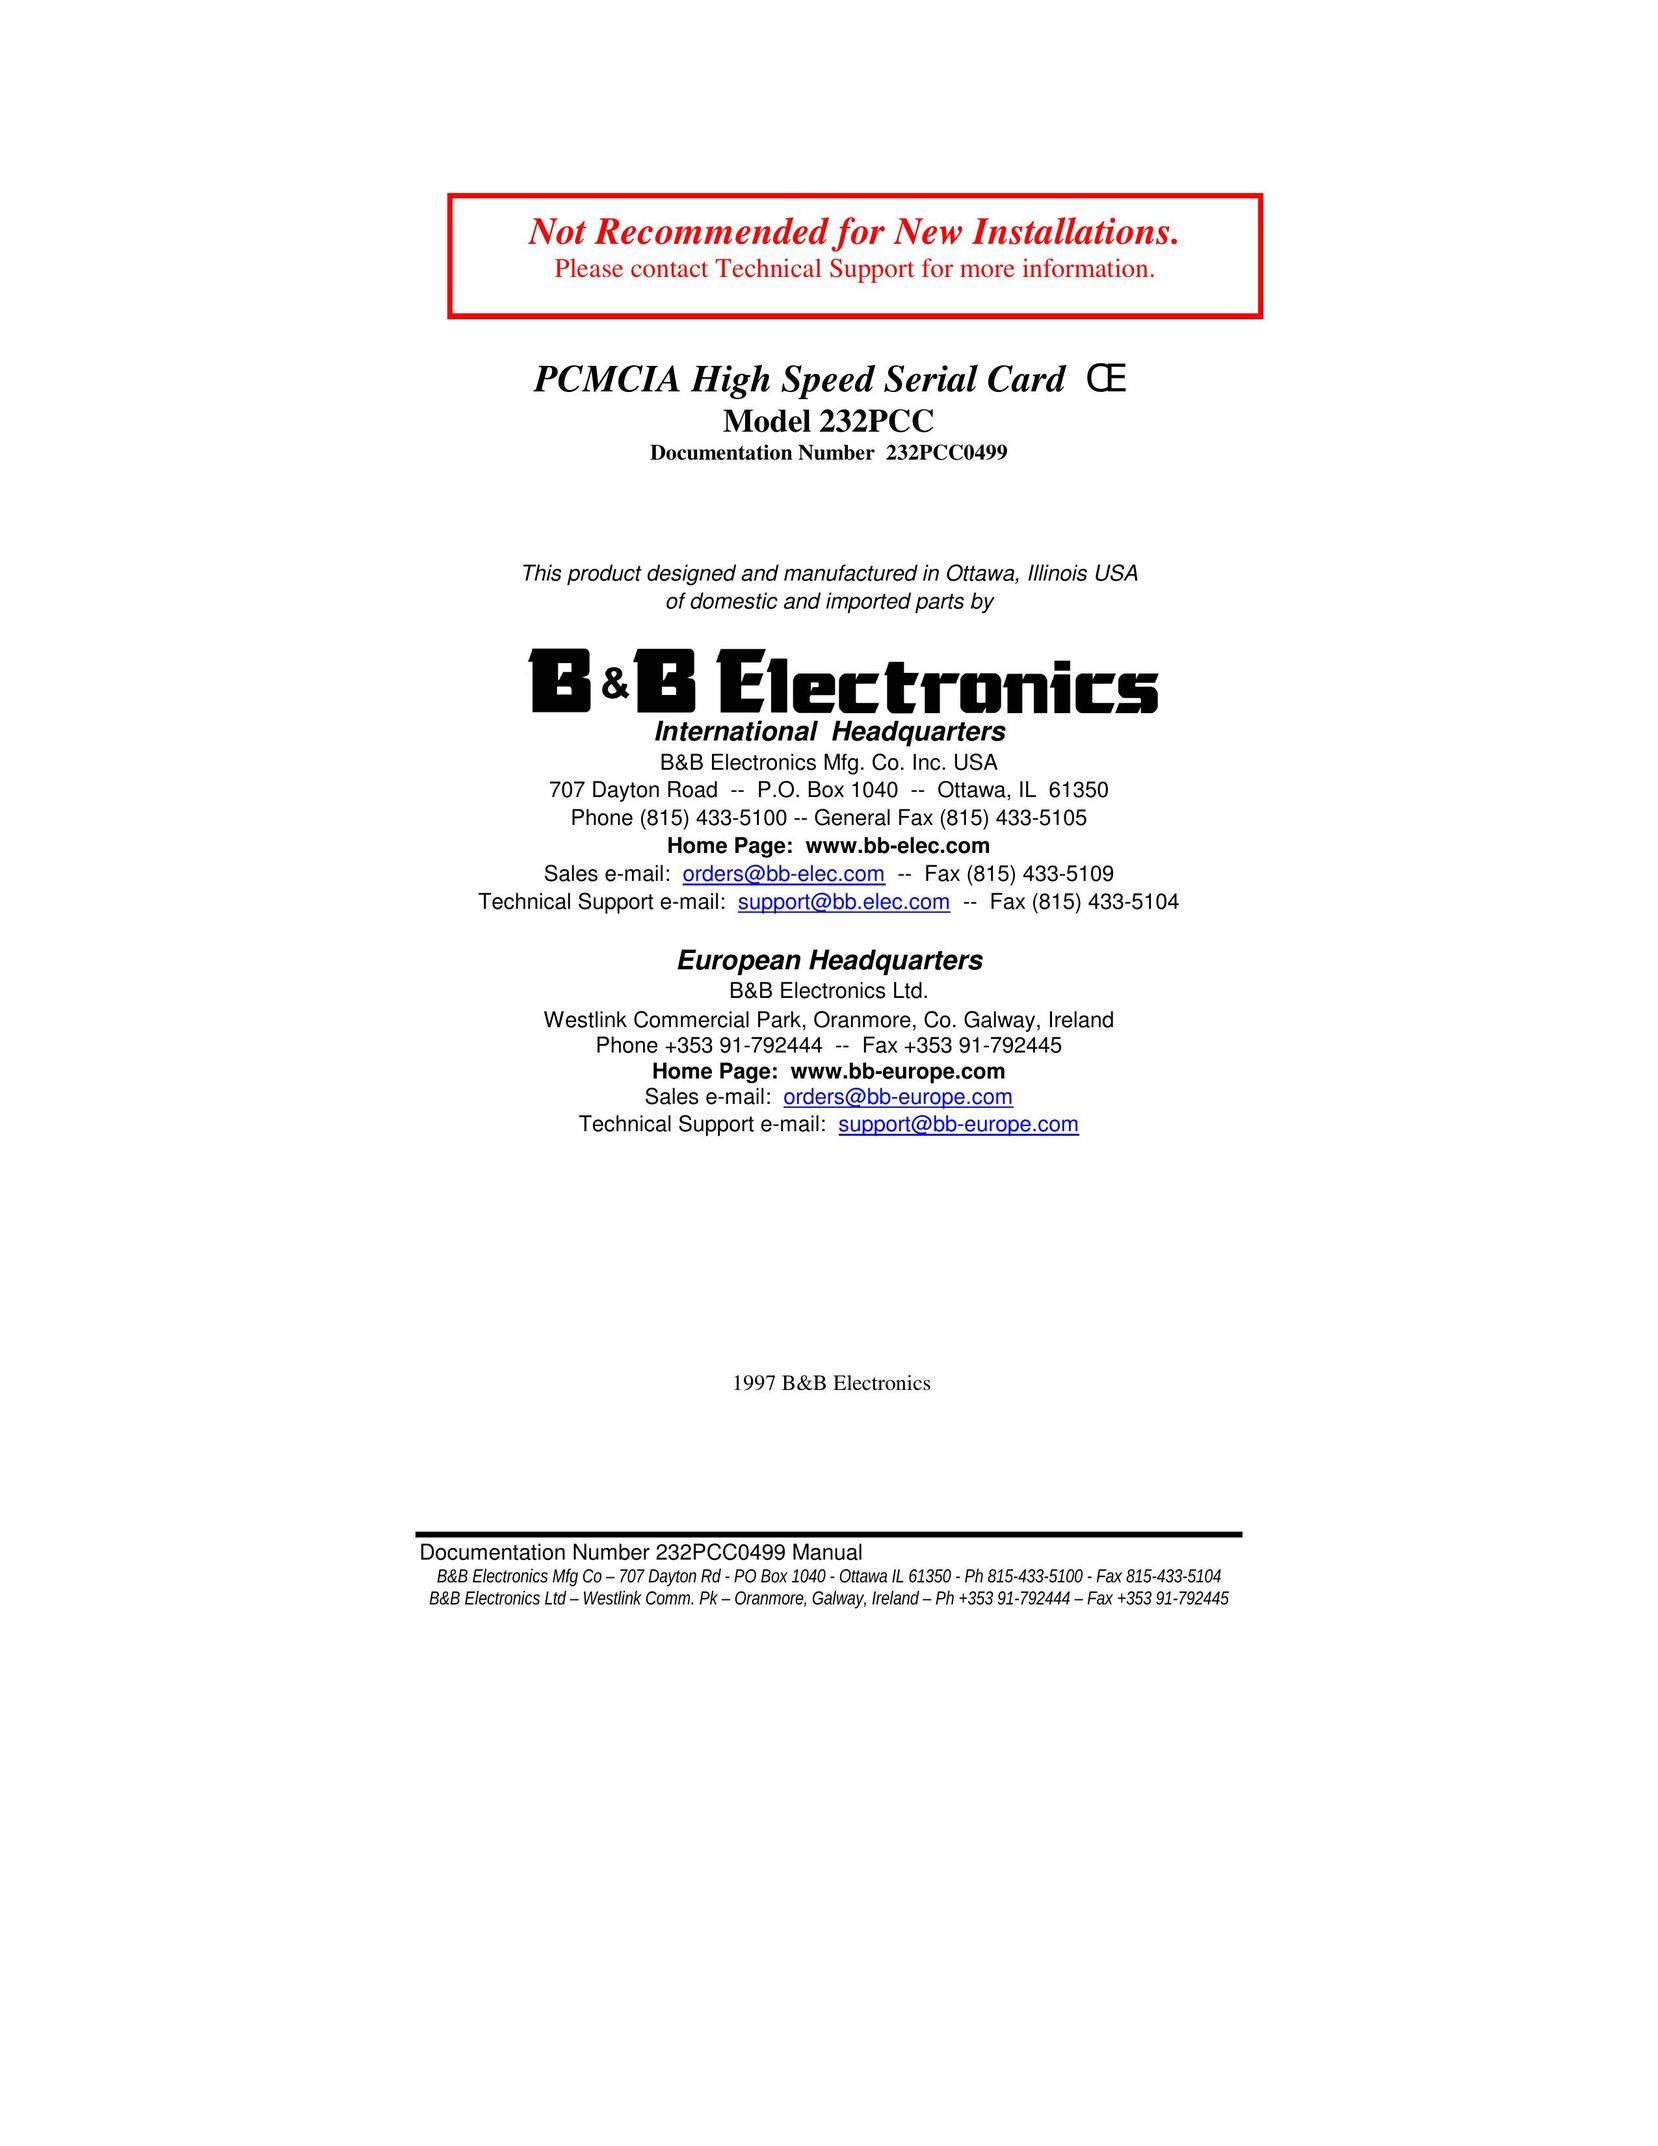 B&B Electronics 232PCC Computer Hardware User Manual